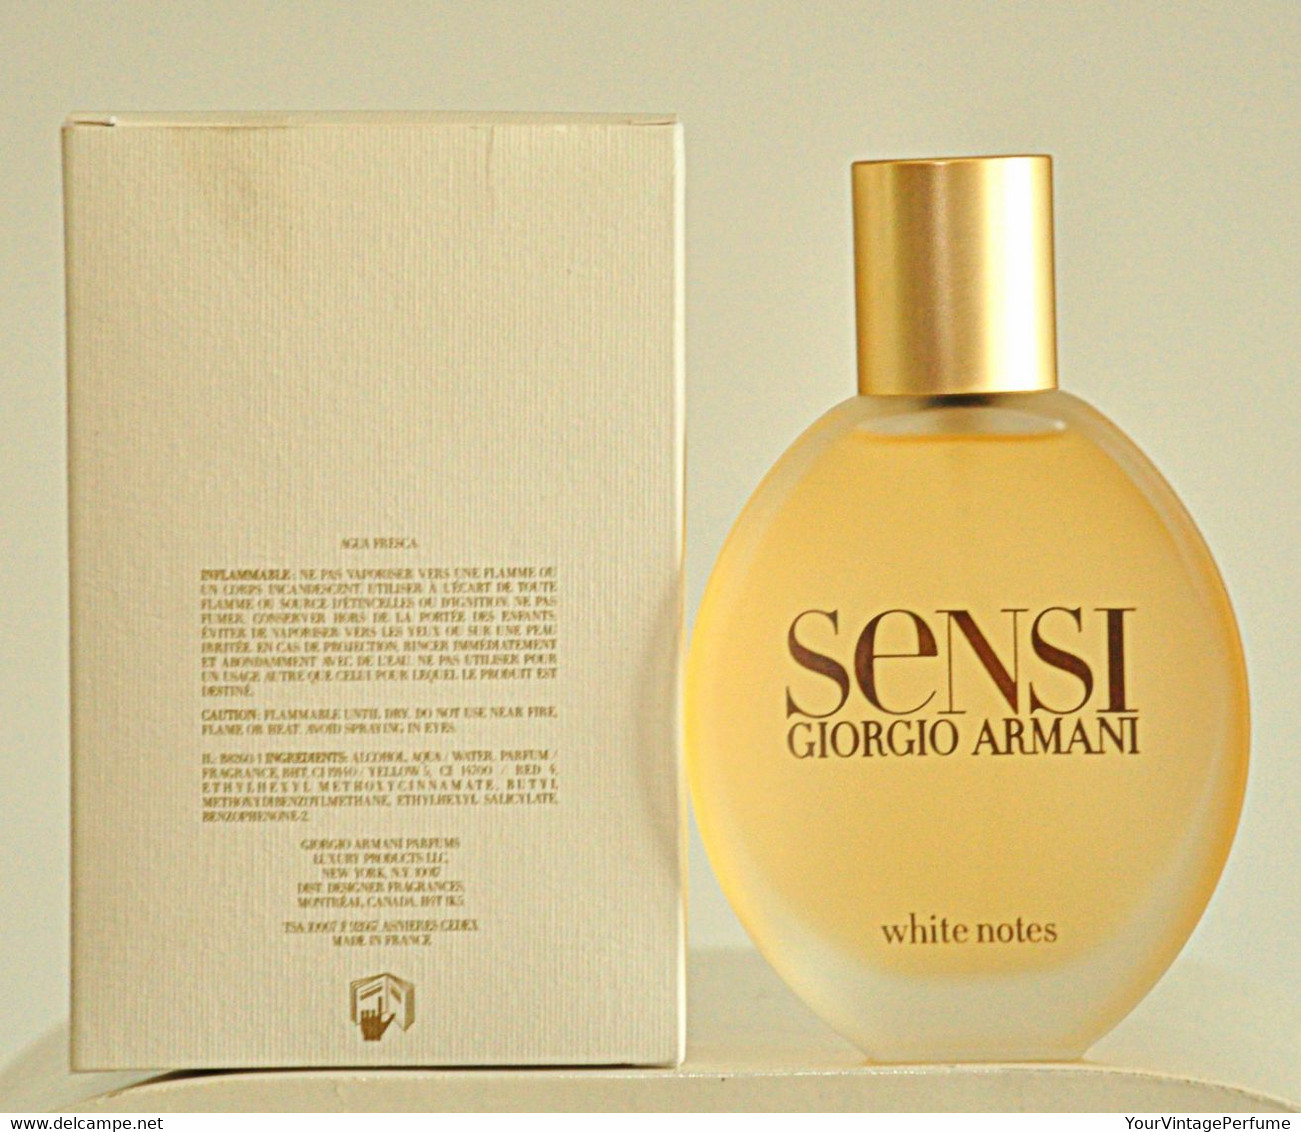 Giorgio Armani Sensi White Notes Eau Fraiche 75ml 2.5 Fl. Oz. Perfume Woman Rare Vintage 2004 - Femme